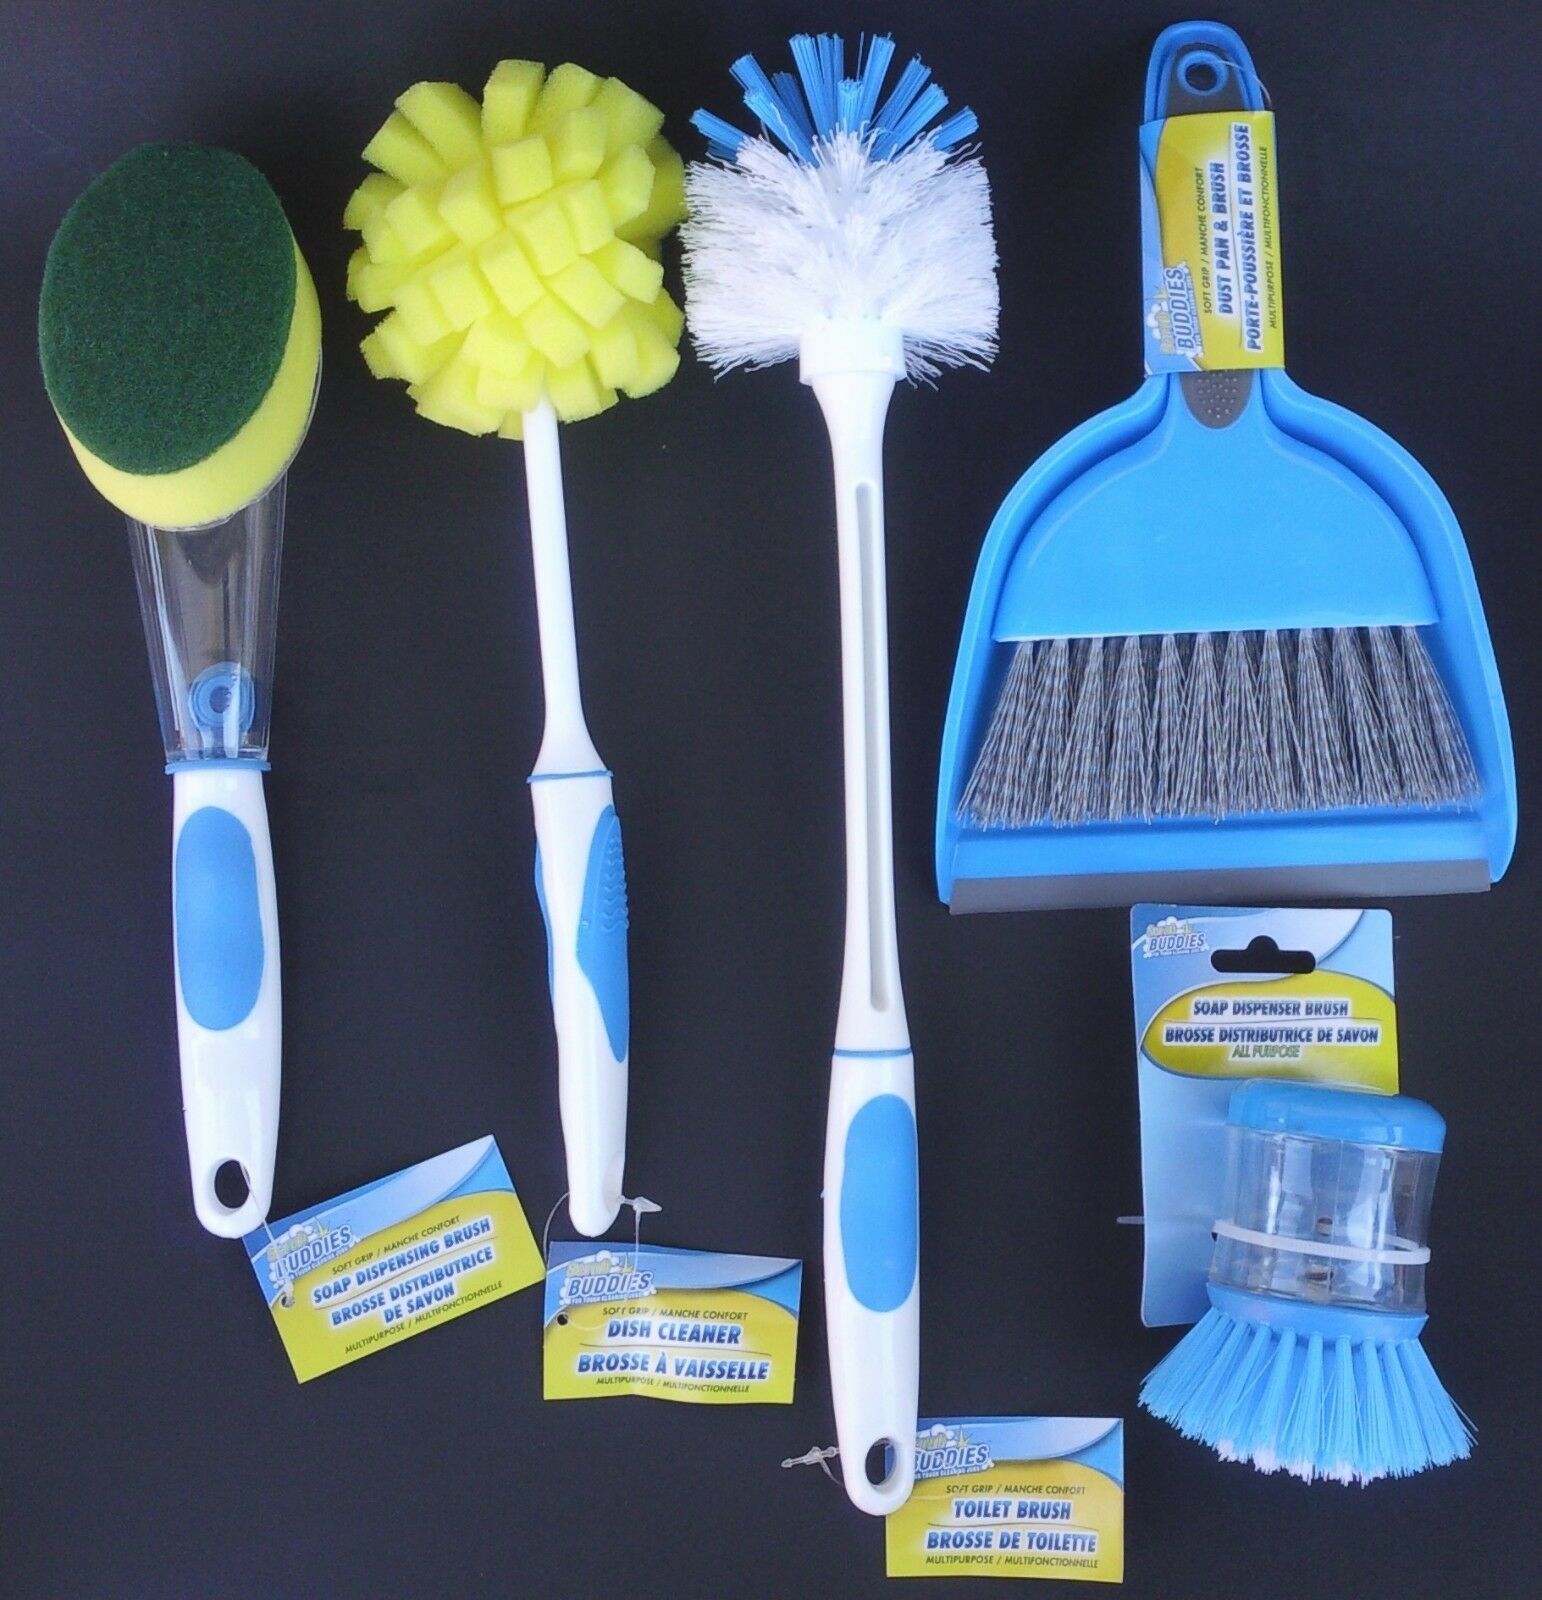 Scrub Buddies Scrub Brushes with Soft-Grip Handles